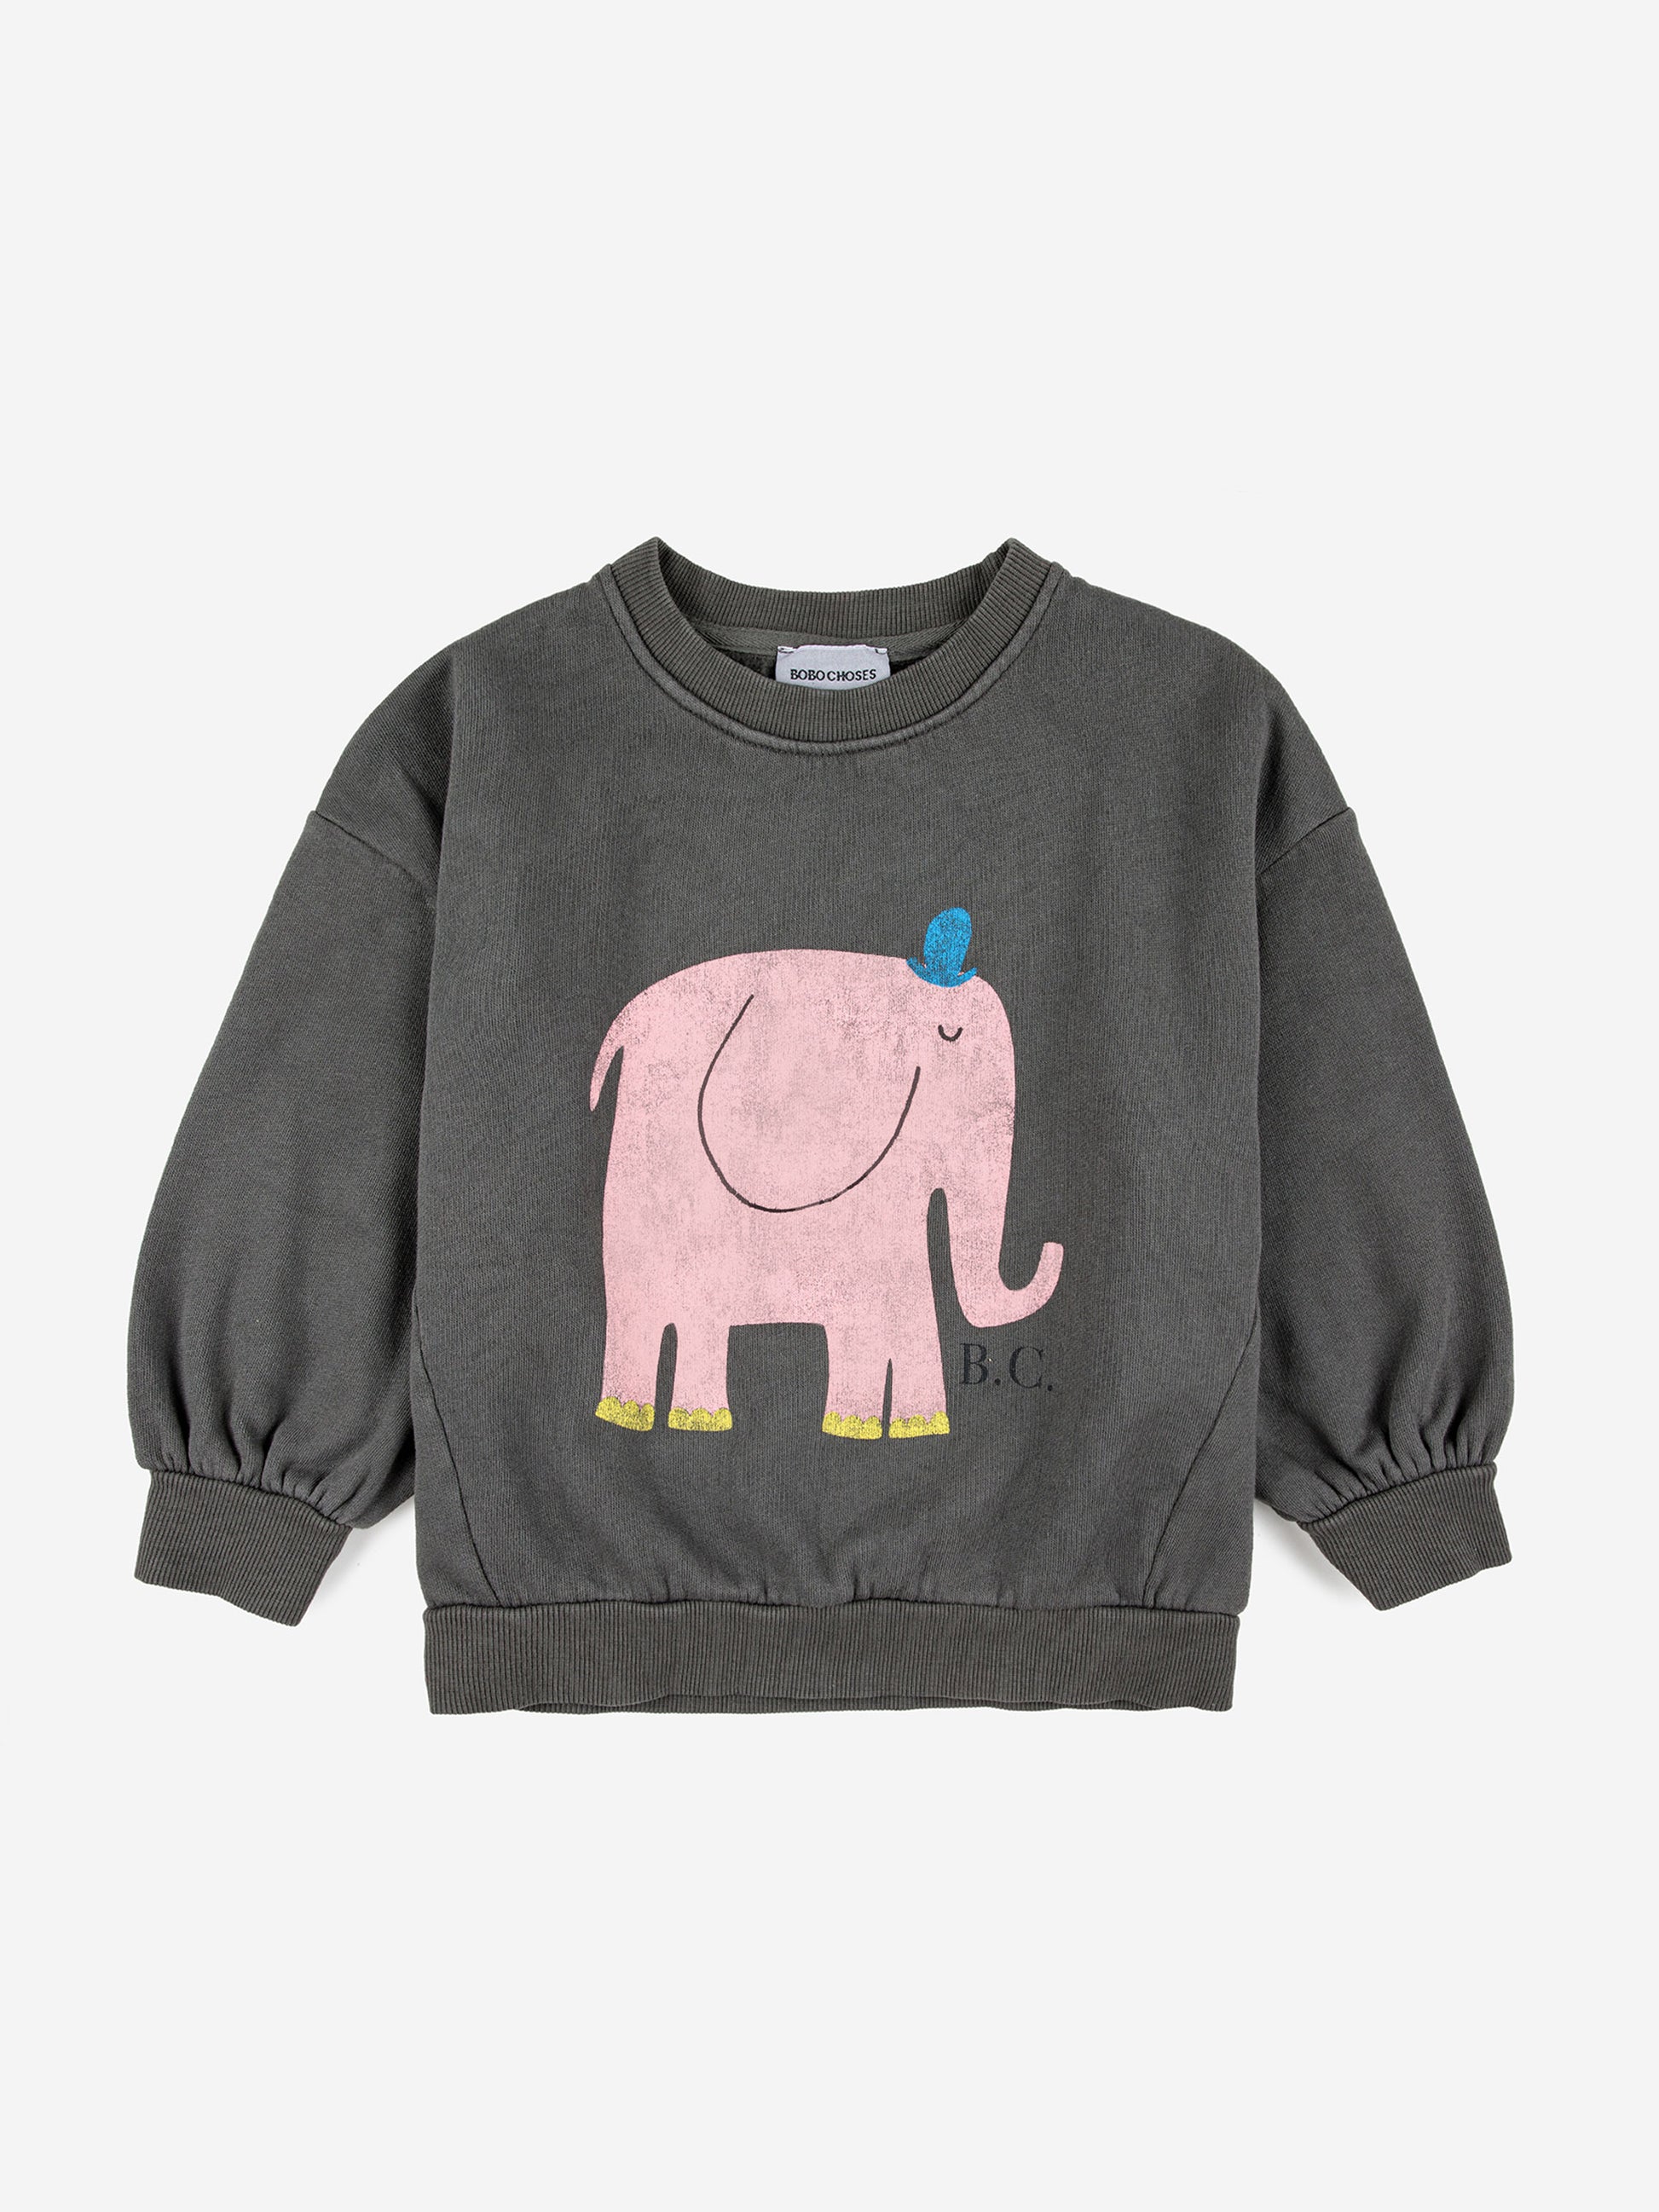 The Elephant sweatshirt – Choses Bobo